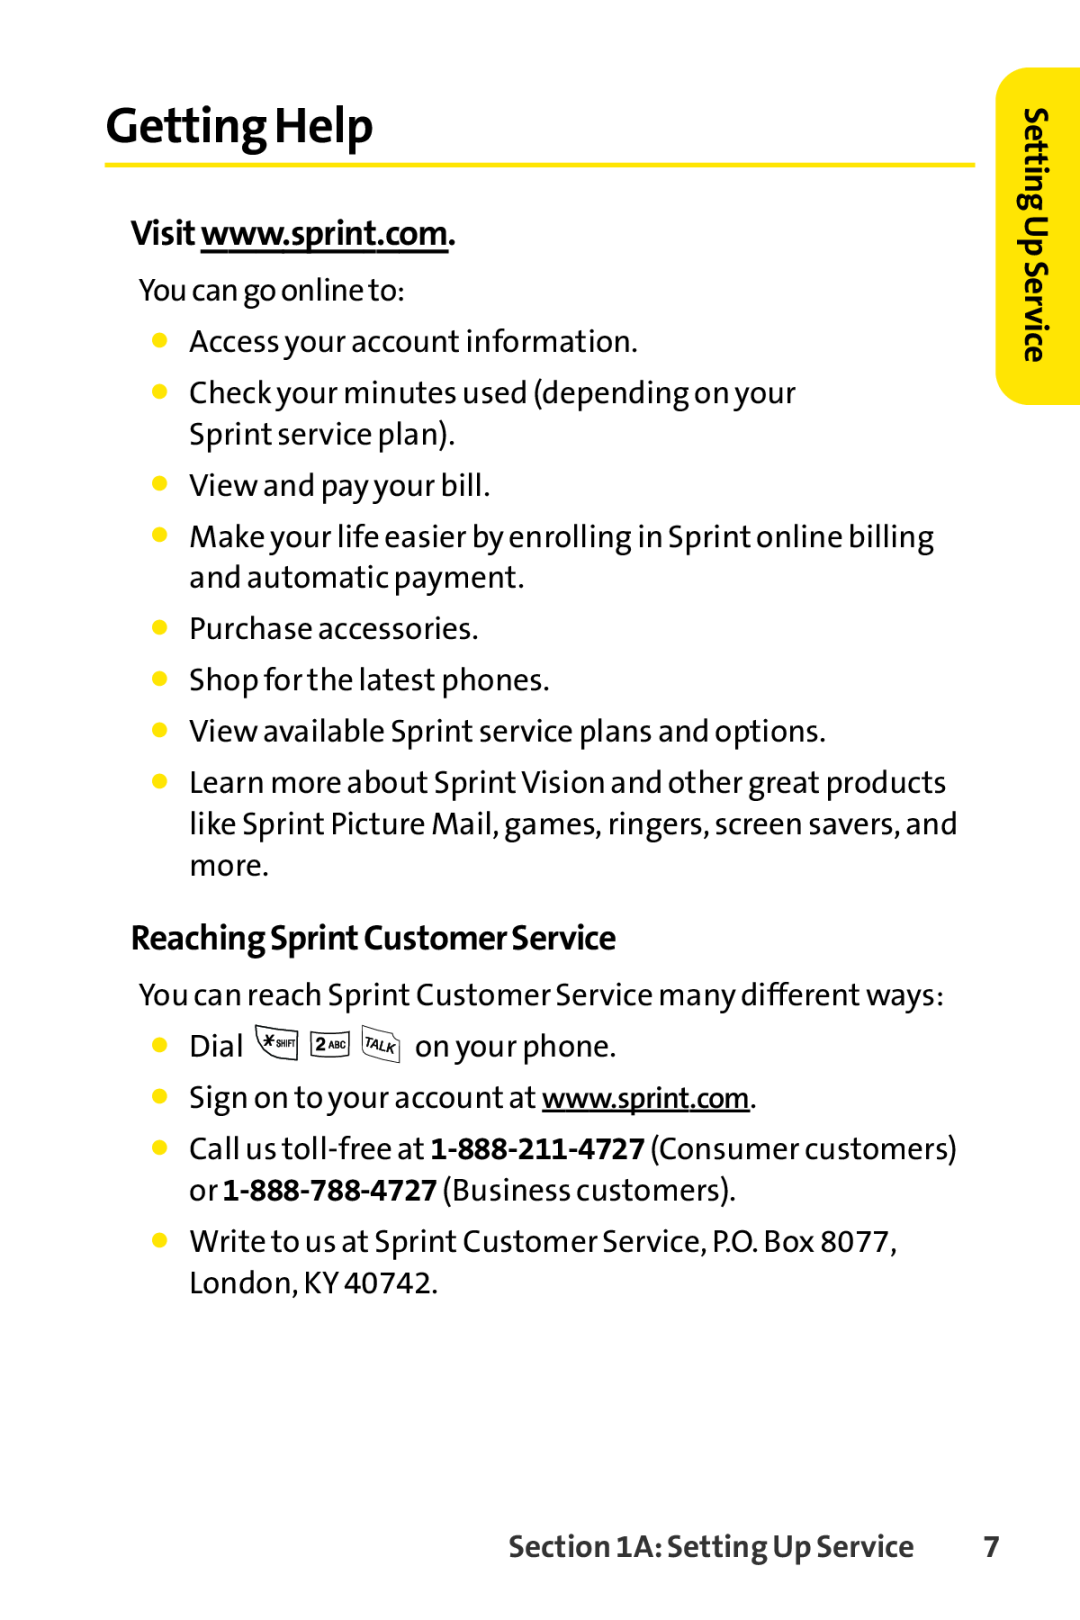 Sprint Nextel LX160 manual Getting Help, ReachingSprintCustomerService, Setting Up Service 